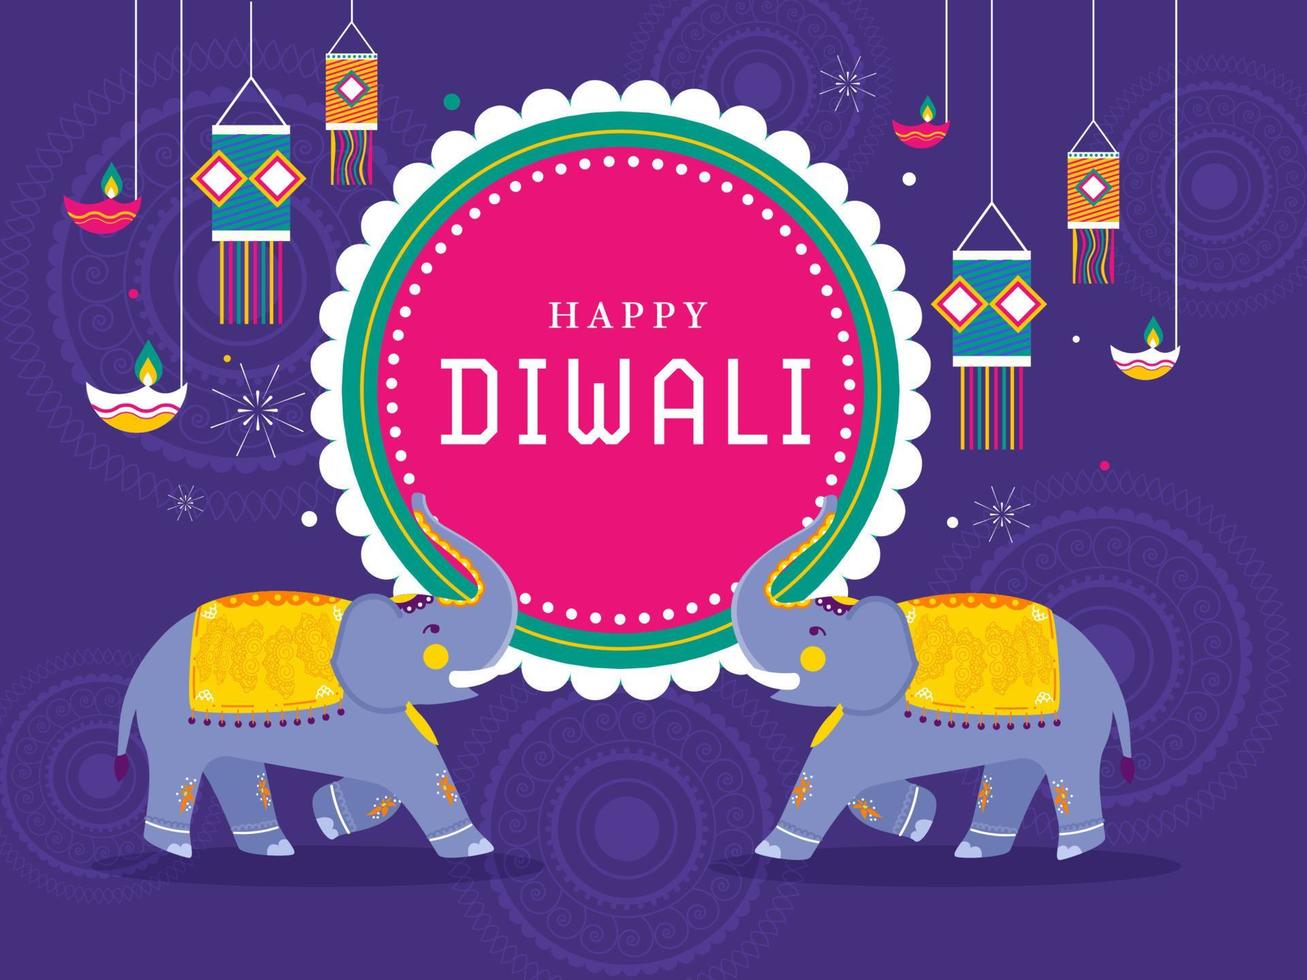 contento diwali celebracion póster diseño con dibujos animados dos elefantes, colgando linternas y iluminado petróleo lamparas decorado en azul mandala modelo antecedentes. vector